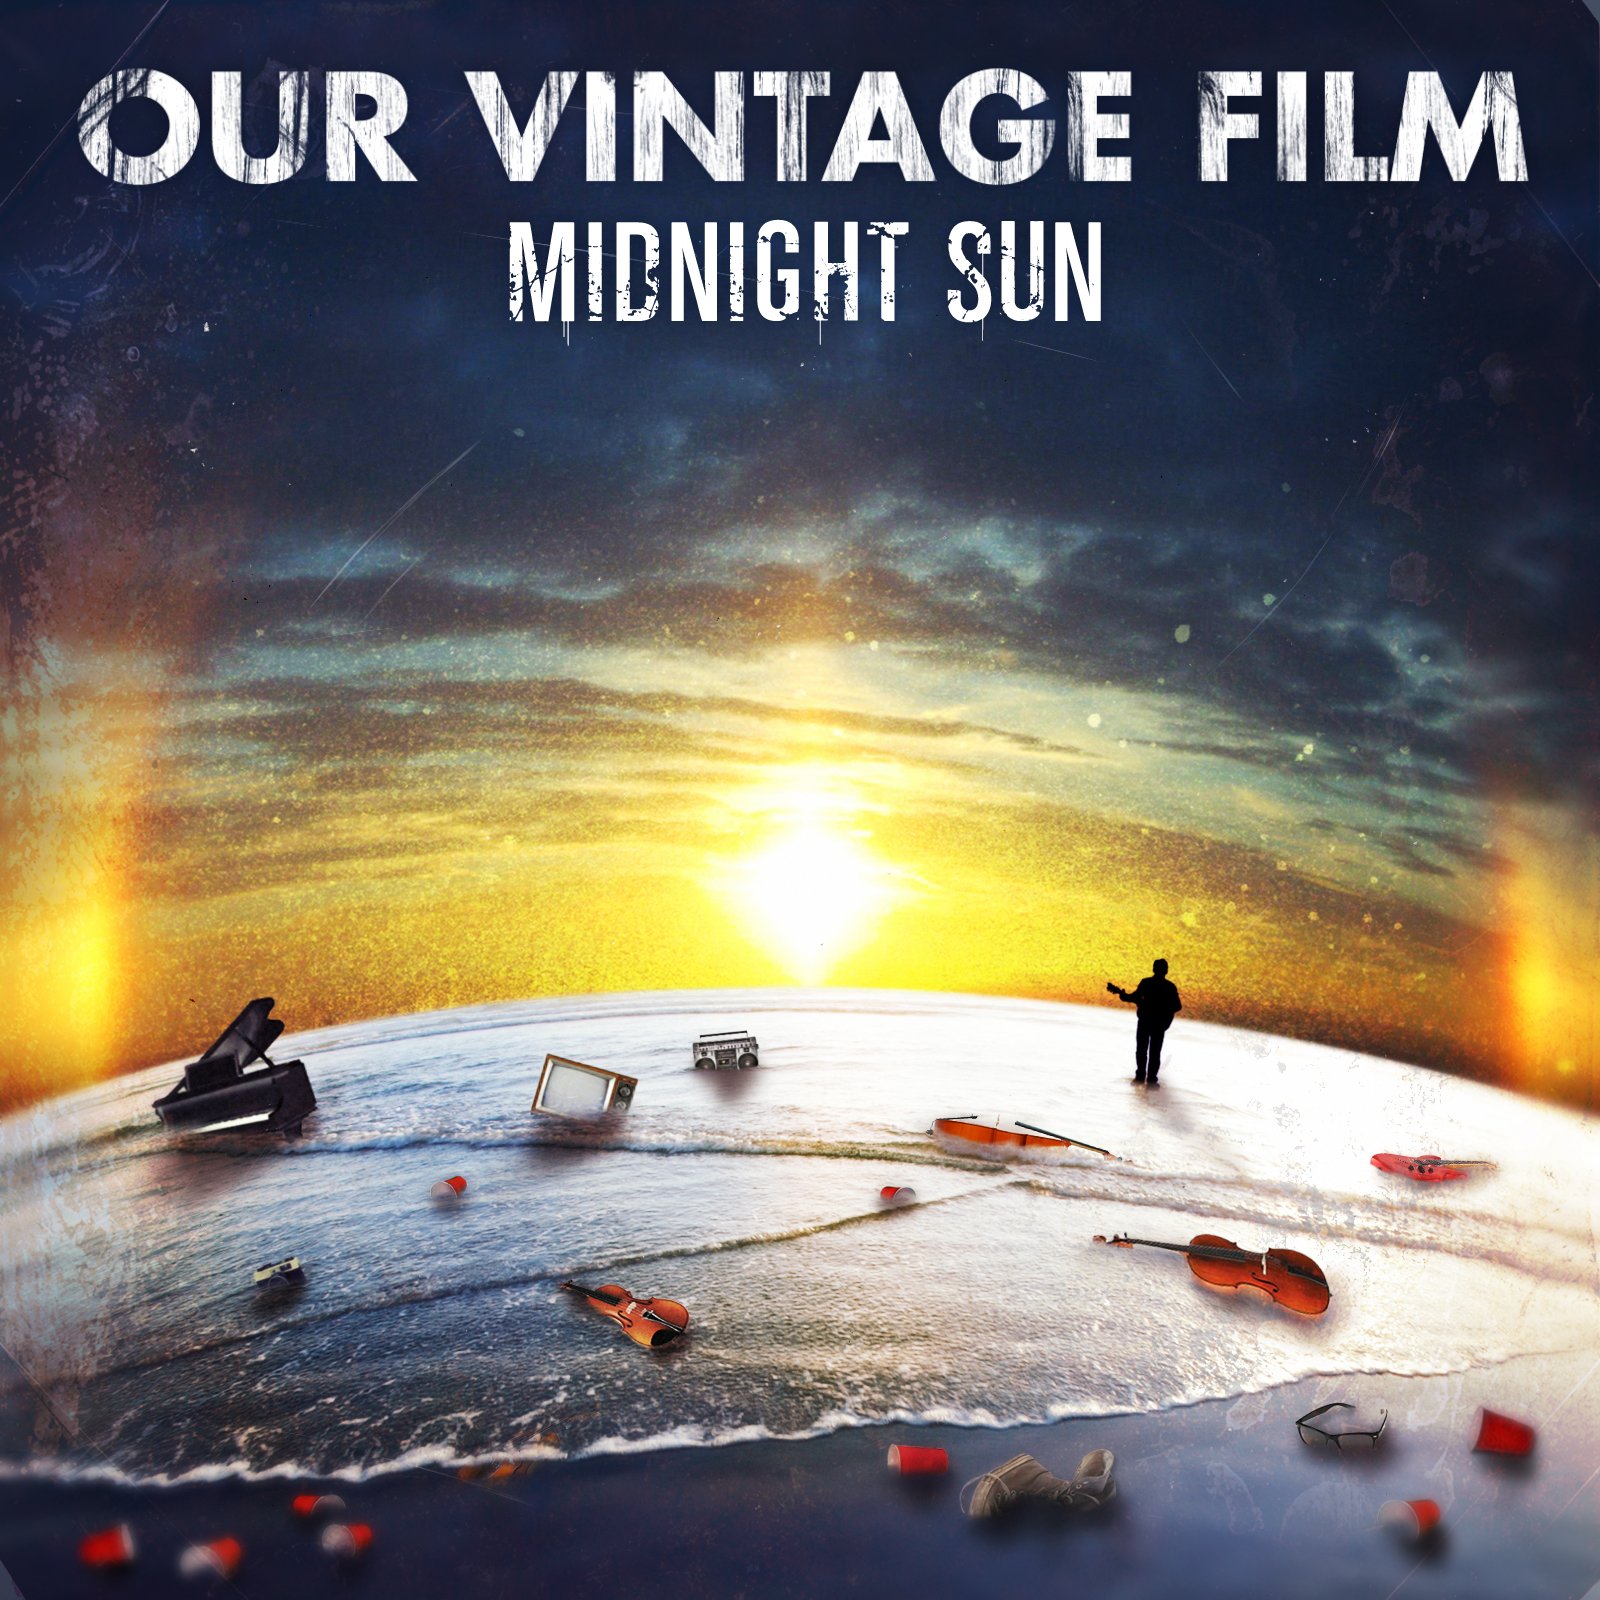 Seventh Day Slumber. The fast Lane Space Ape альбом. Wisdom of the Midnight Sun. Flora Purim - the Midnight Sun. Ярче солнца треки